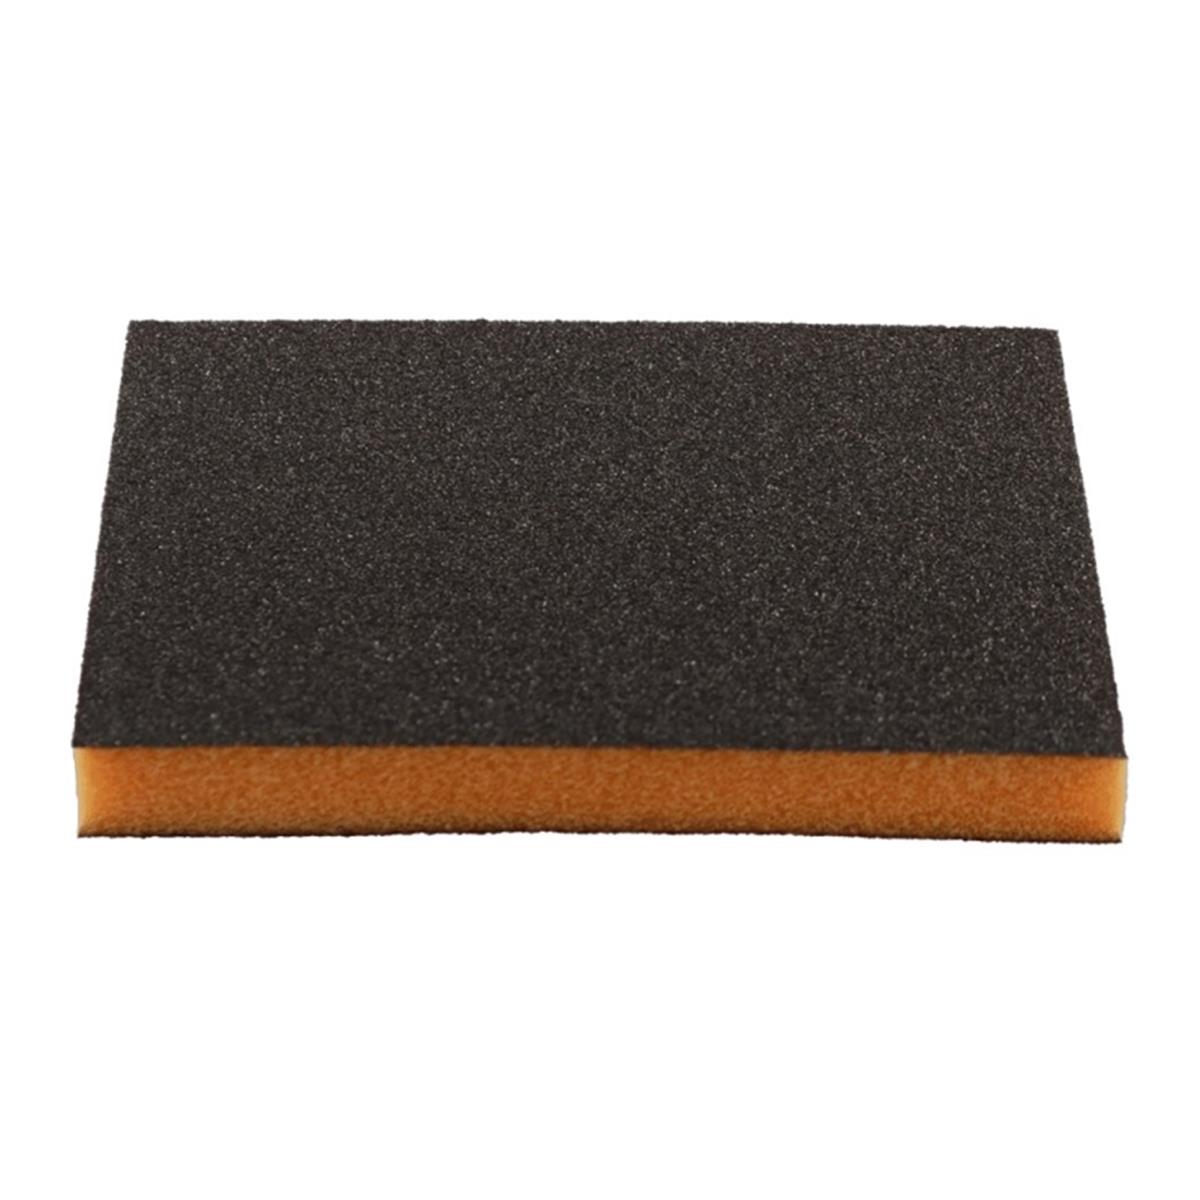 Picture of Freud America 1018204 60 Grit Ultraflex Medium Sanding Sponge - Pack of 2